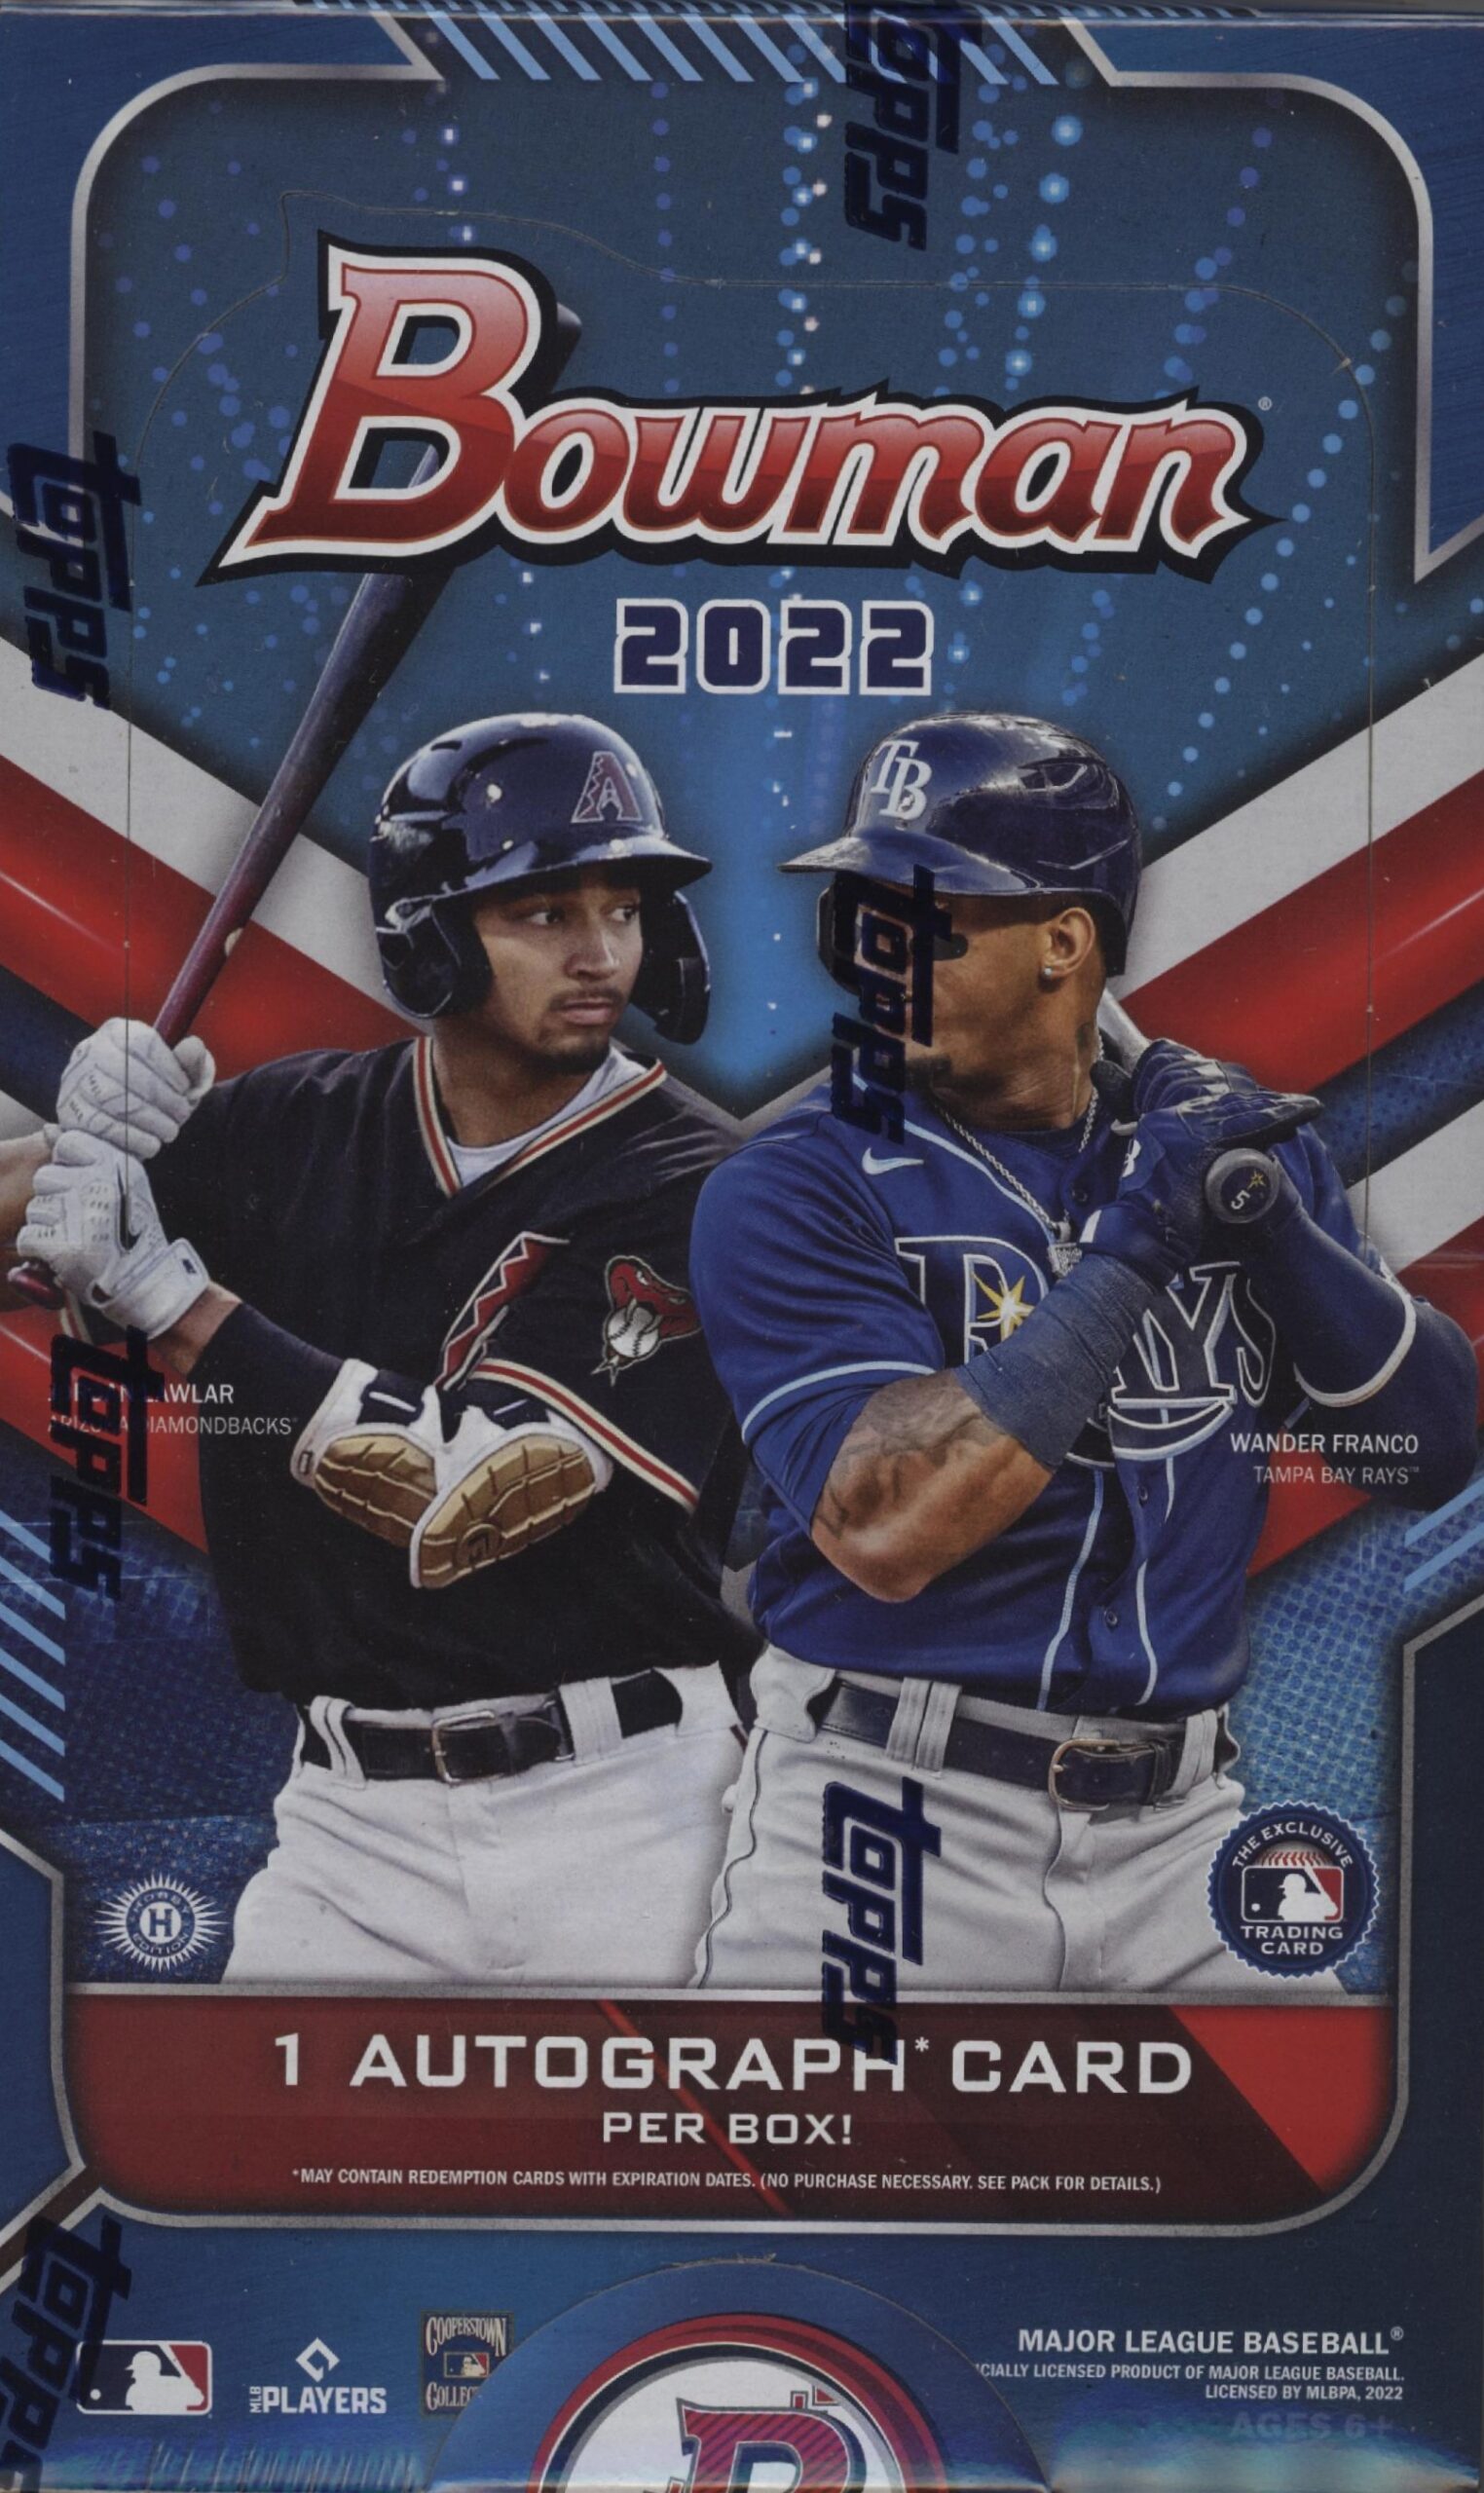 ⚾ MLB 2022 TOPPS BOWMAN BASEBALL HOBBY【製品情報】 | Trading Card Journal